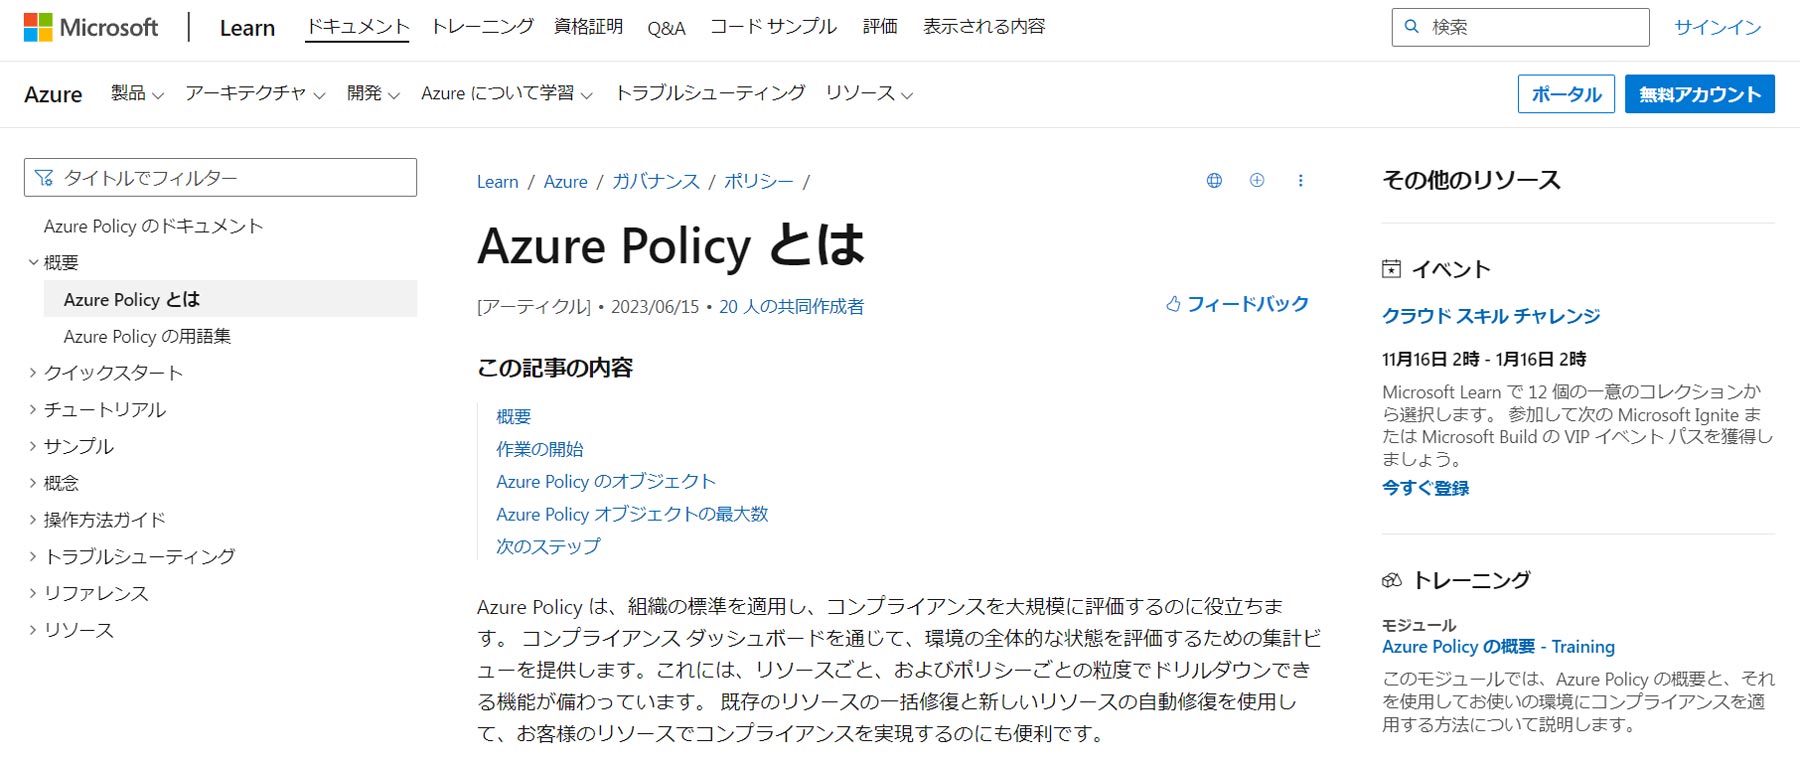 Azure Policy公式Webサイト